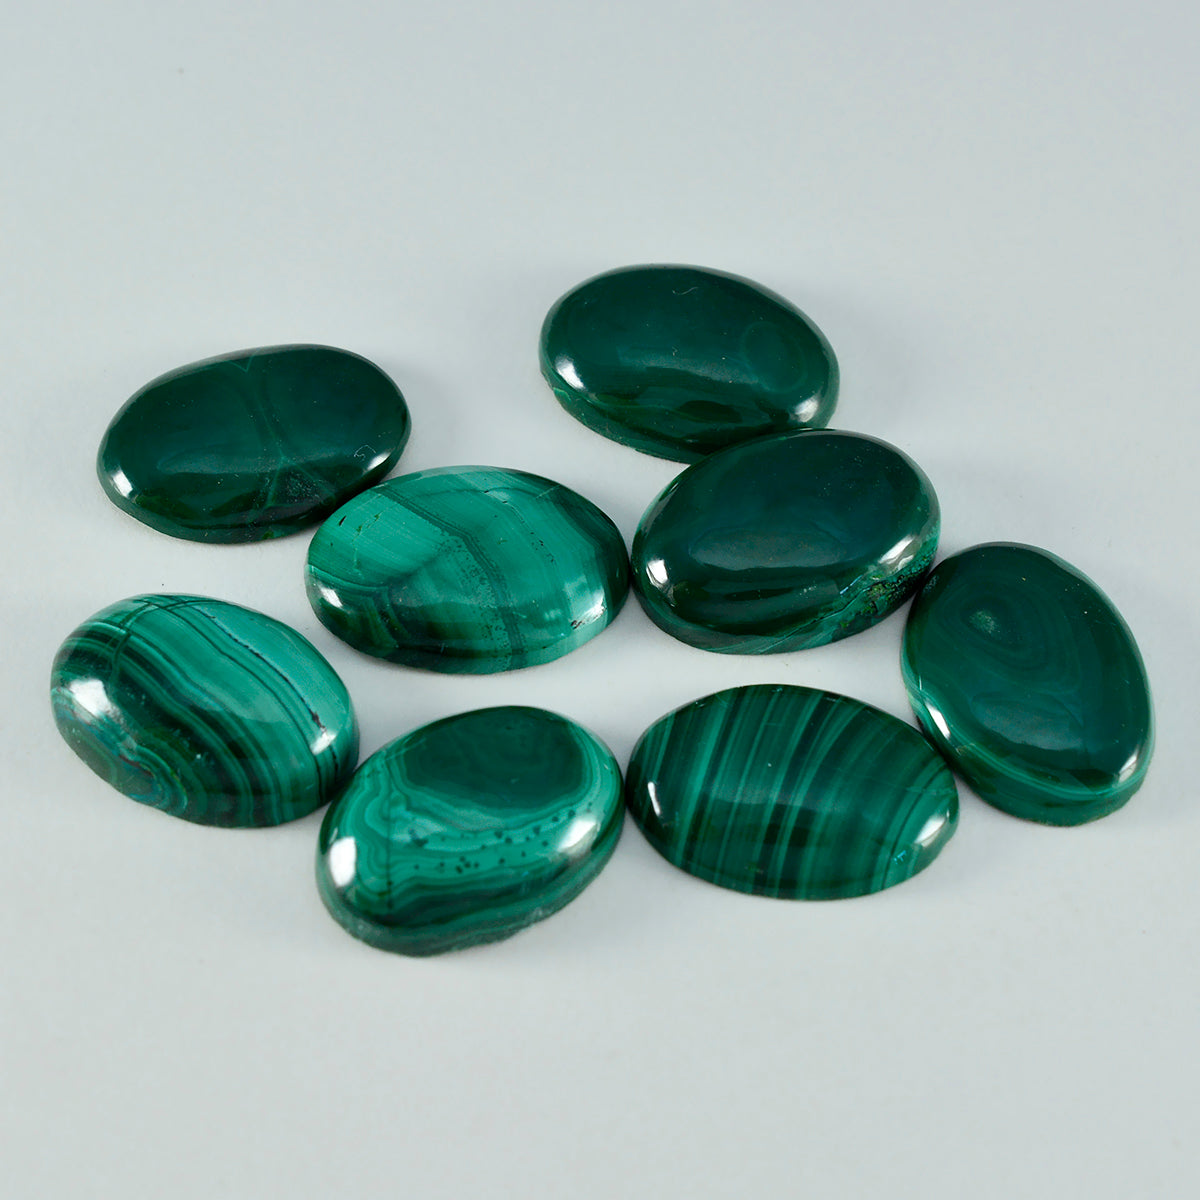 Riyogems 1PC Green Malachite Cabochon 10x14 mm Oval Shape AA Quality Loose Gemstone